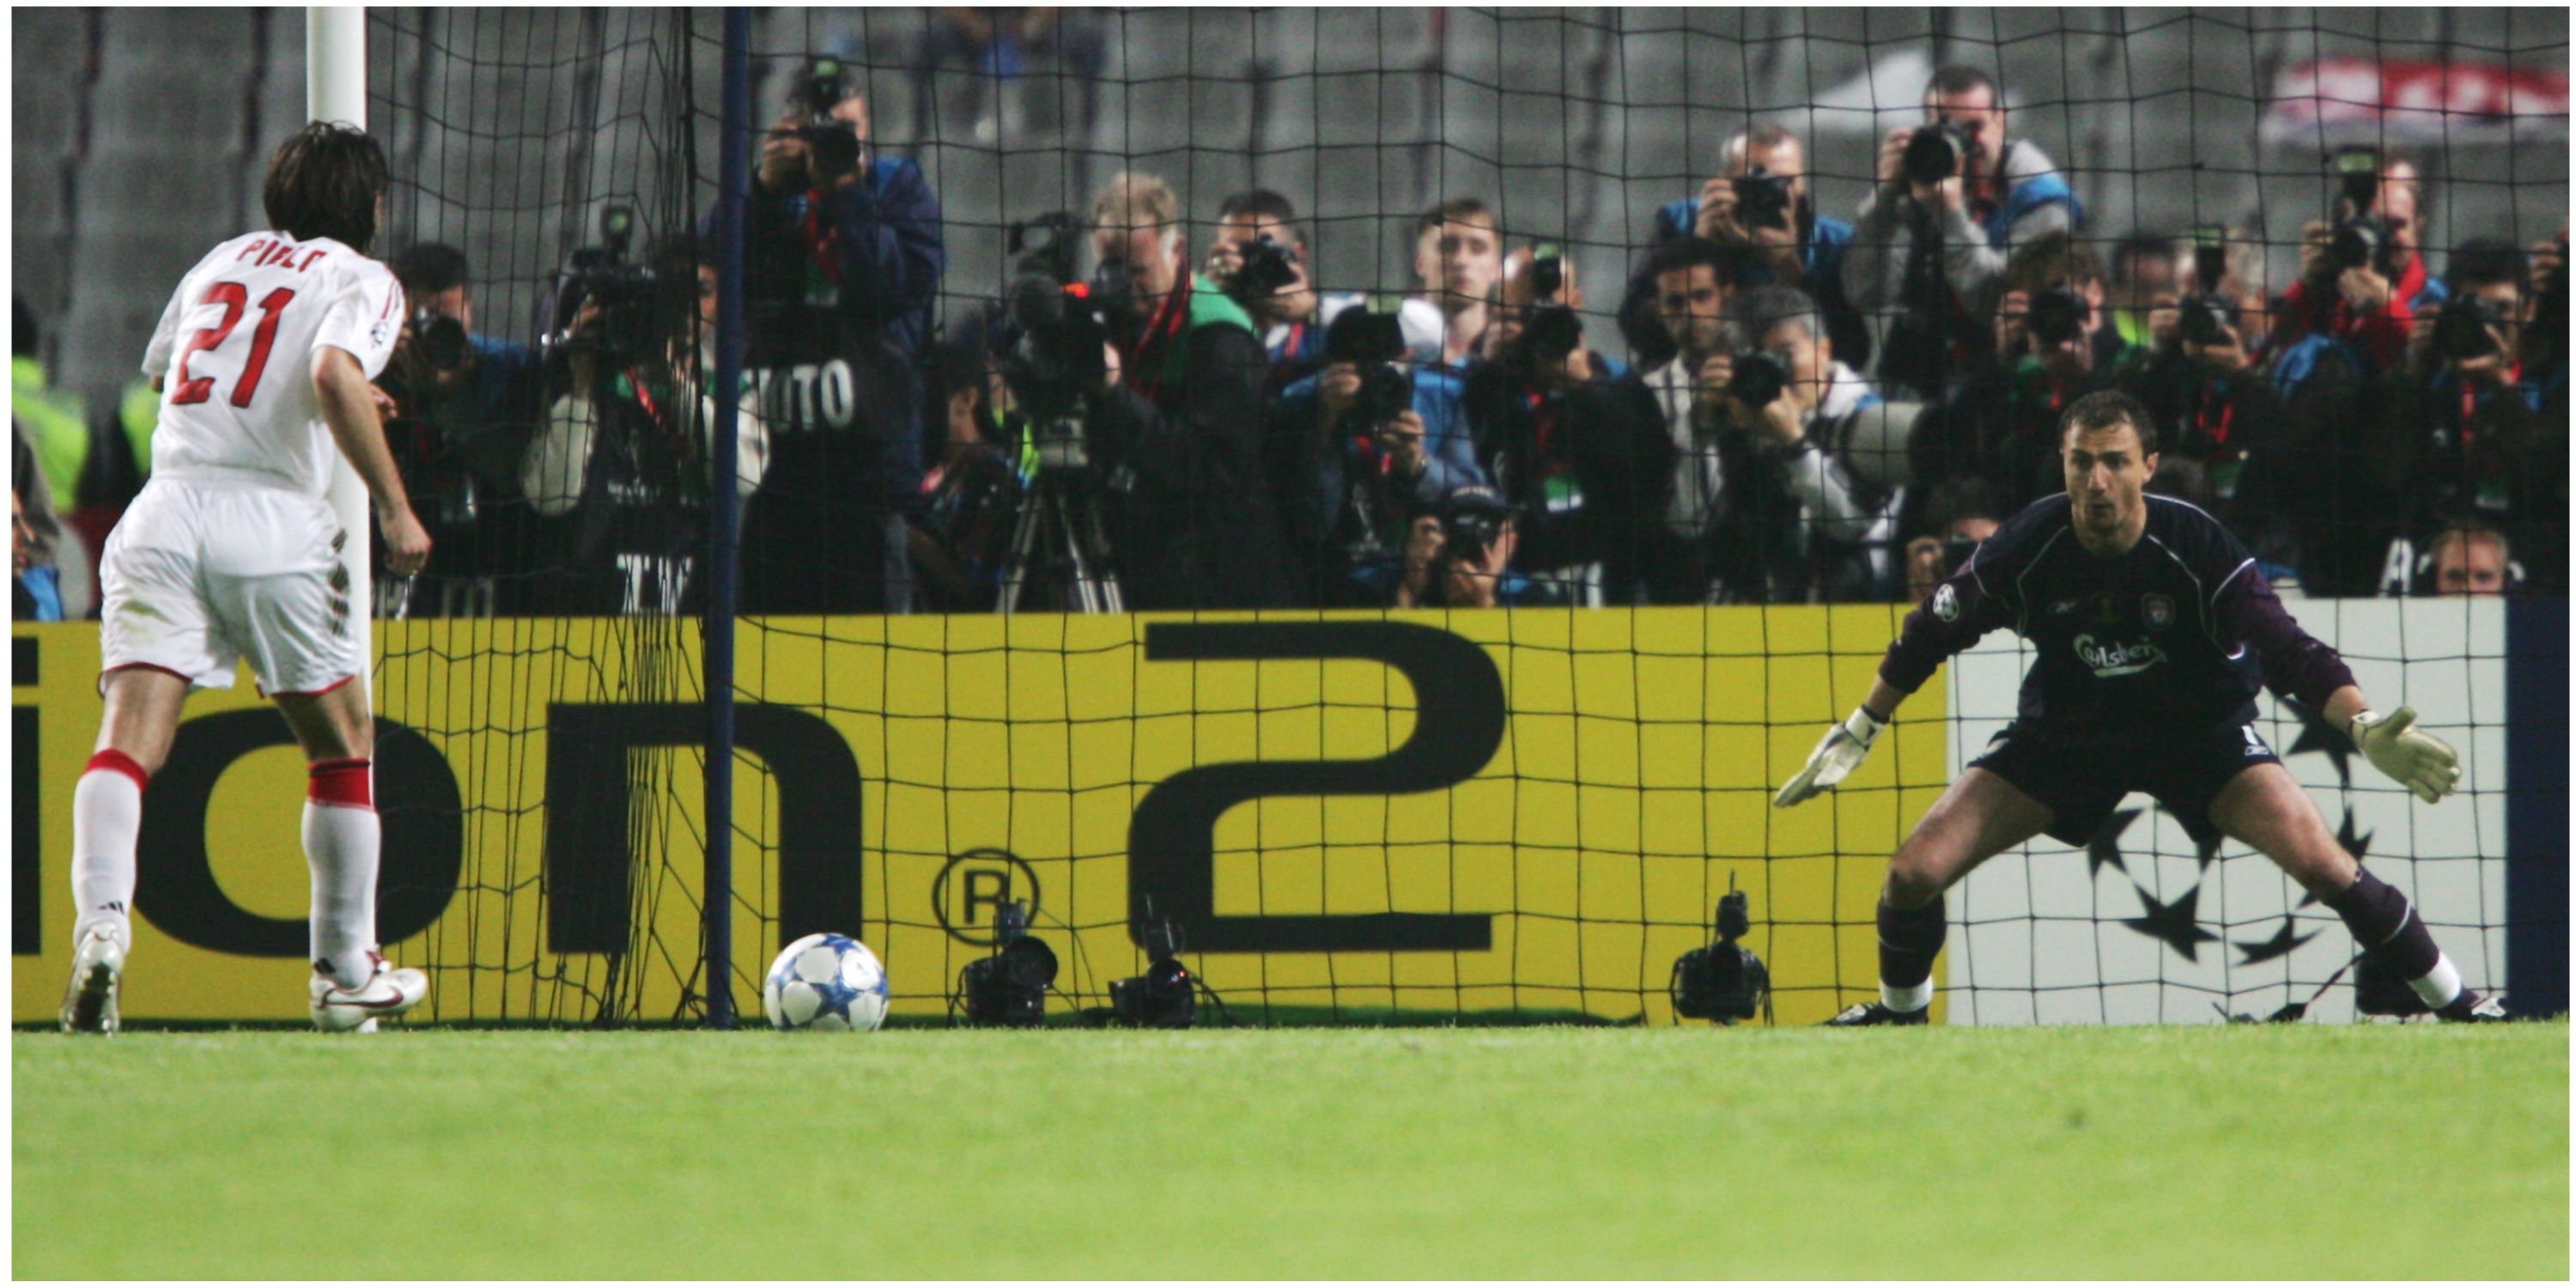 Liverpool: Jerzy Dudek penalty save in 2005 Champions League final is still remarkable